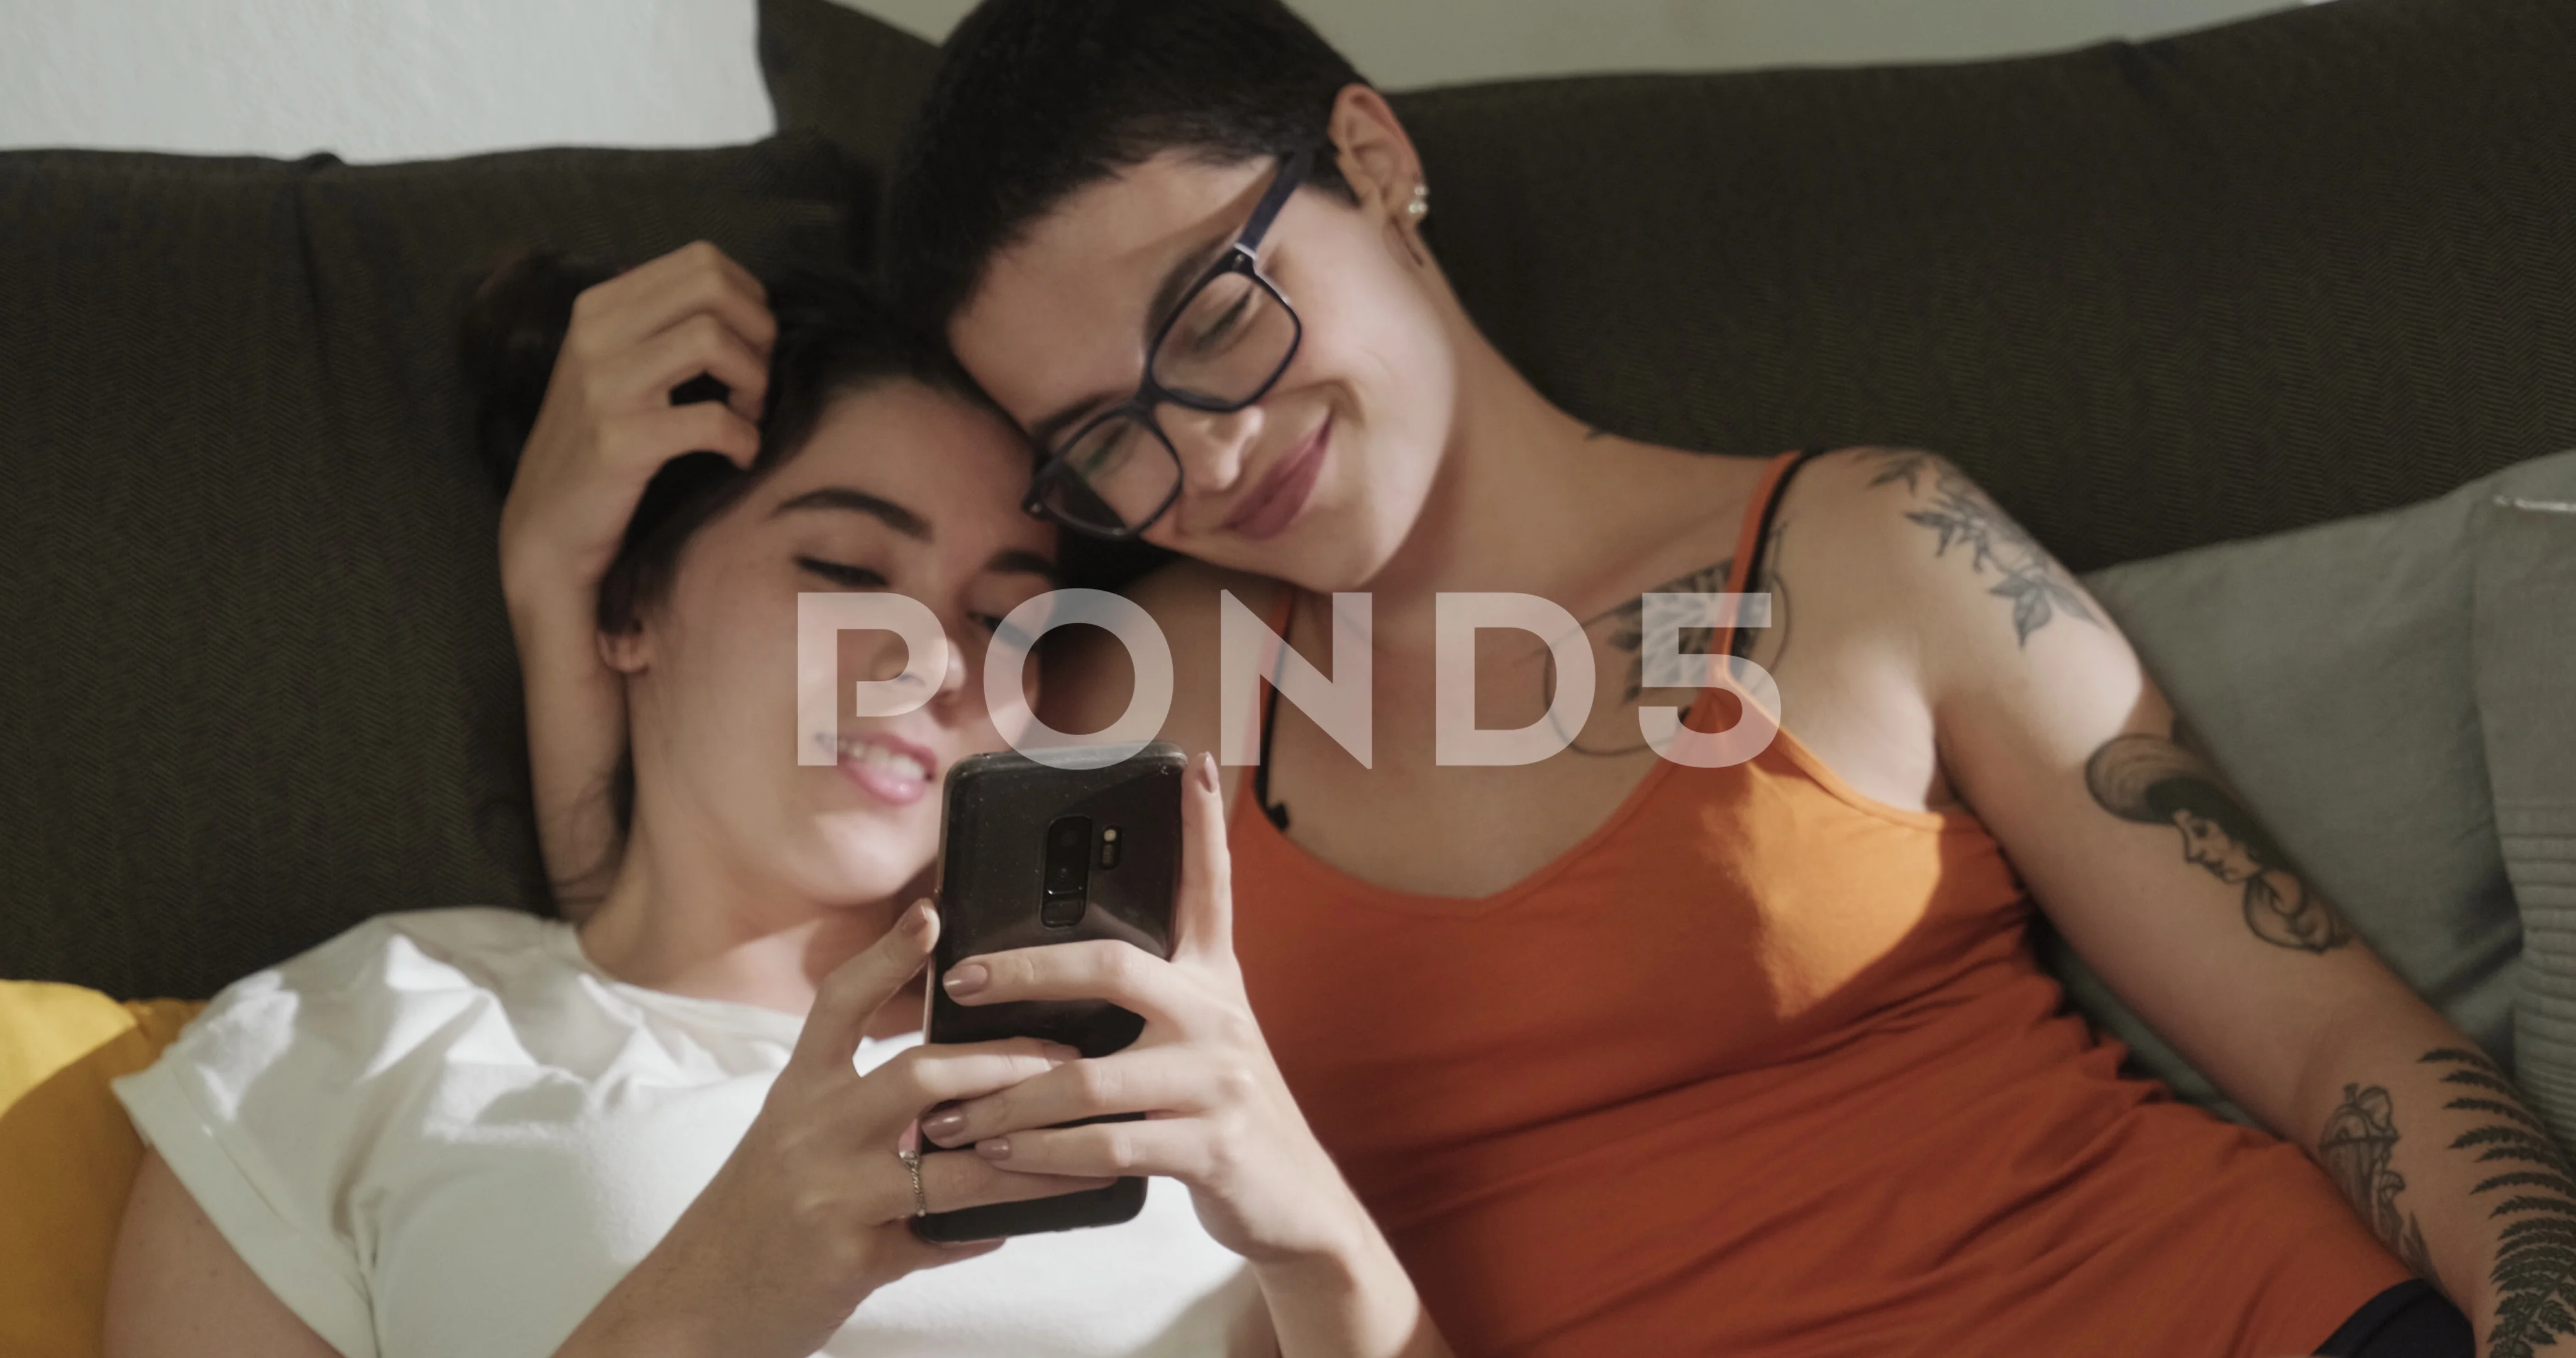 Lesbian Love Lesbian Pussyfucking - Lesbian mobile. Lesbian Porn Videos: Free Teen Lesbian Sex ...